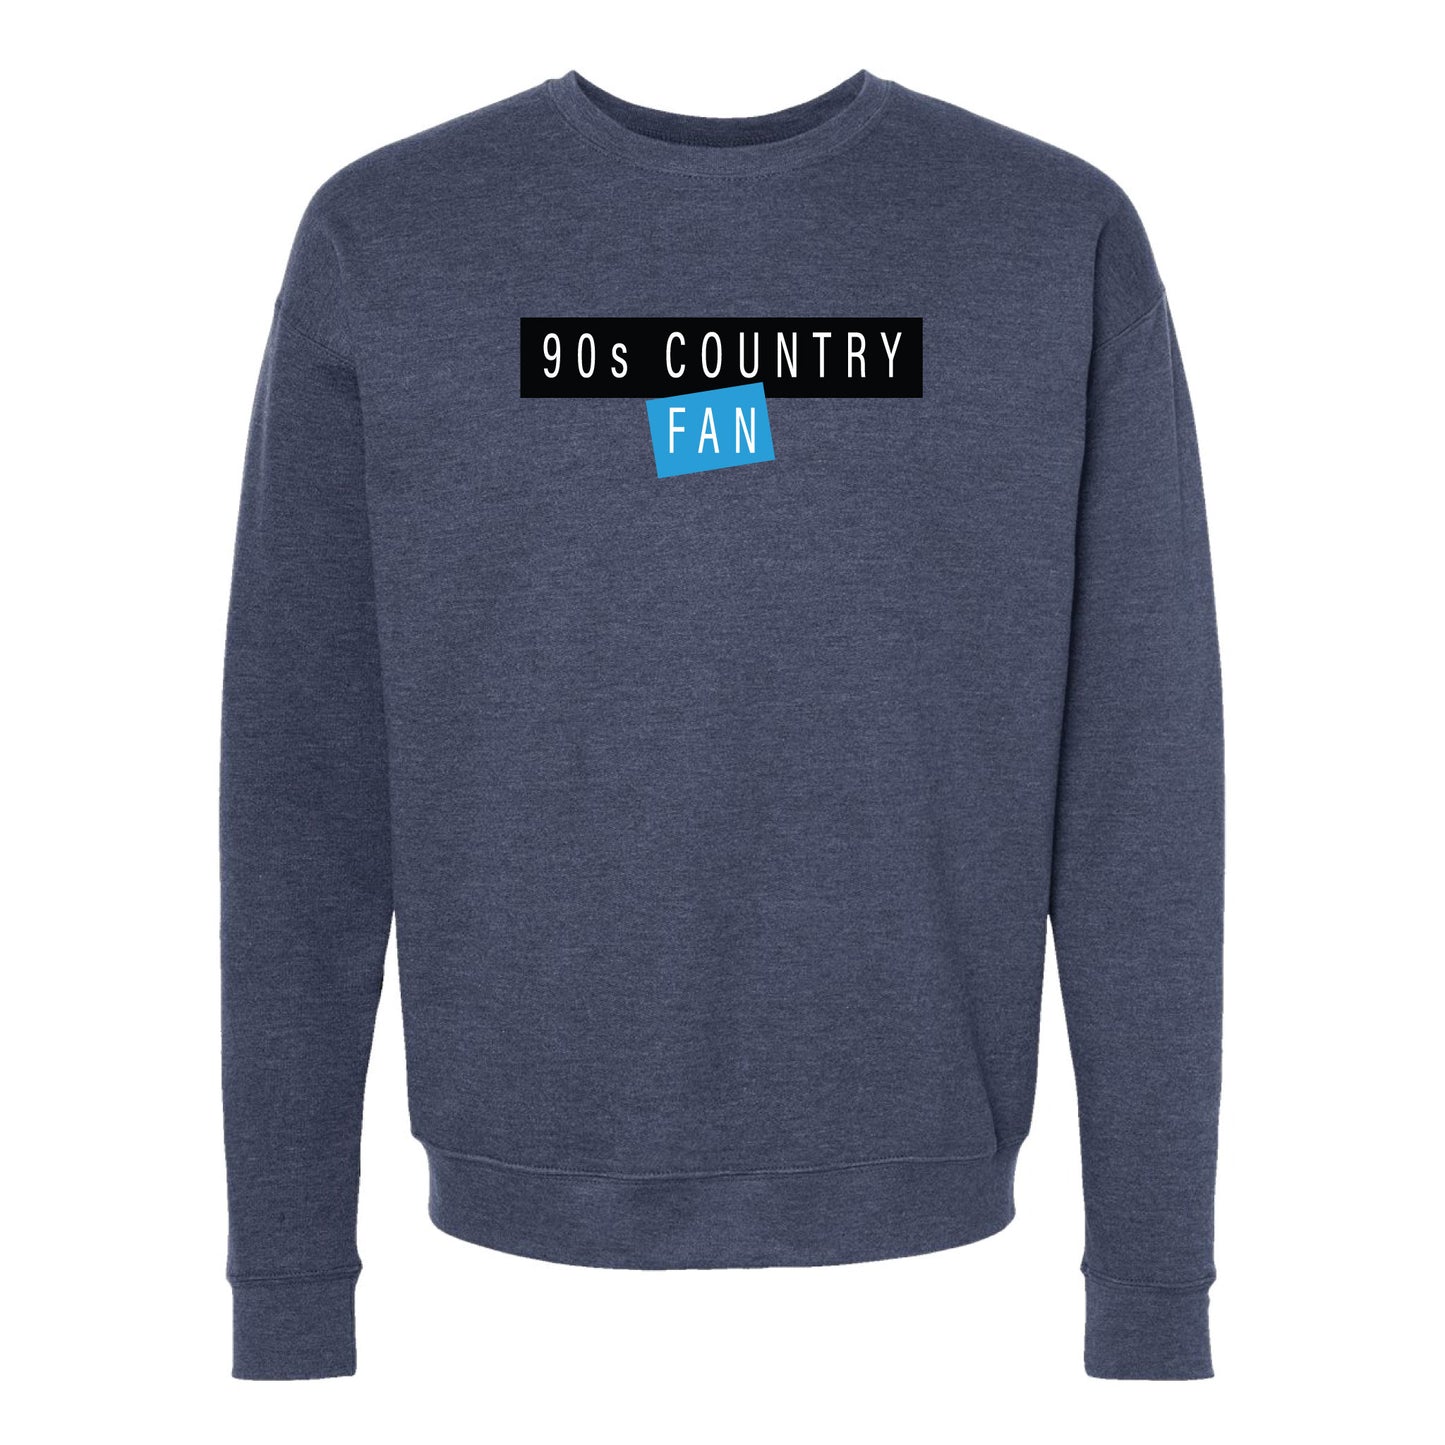 90s Country Fan Crewneck Sweatshirt